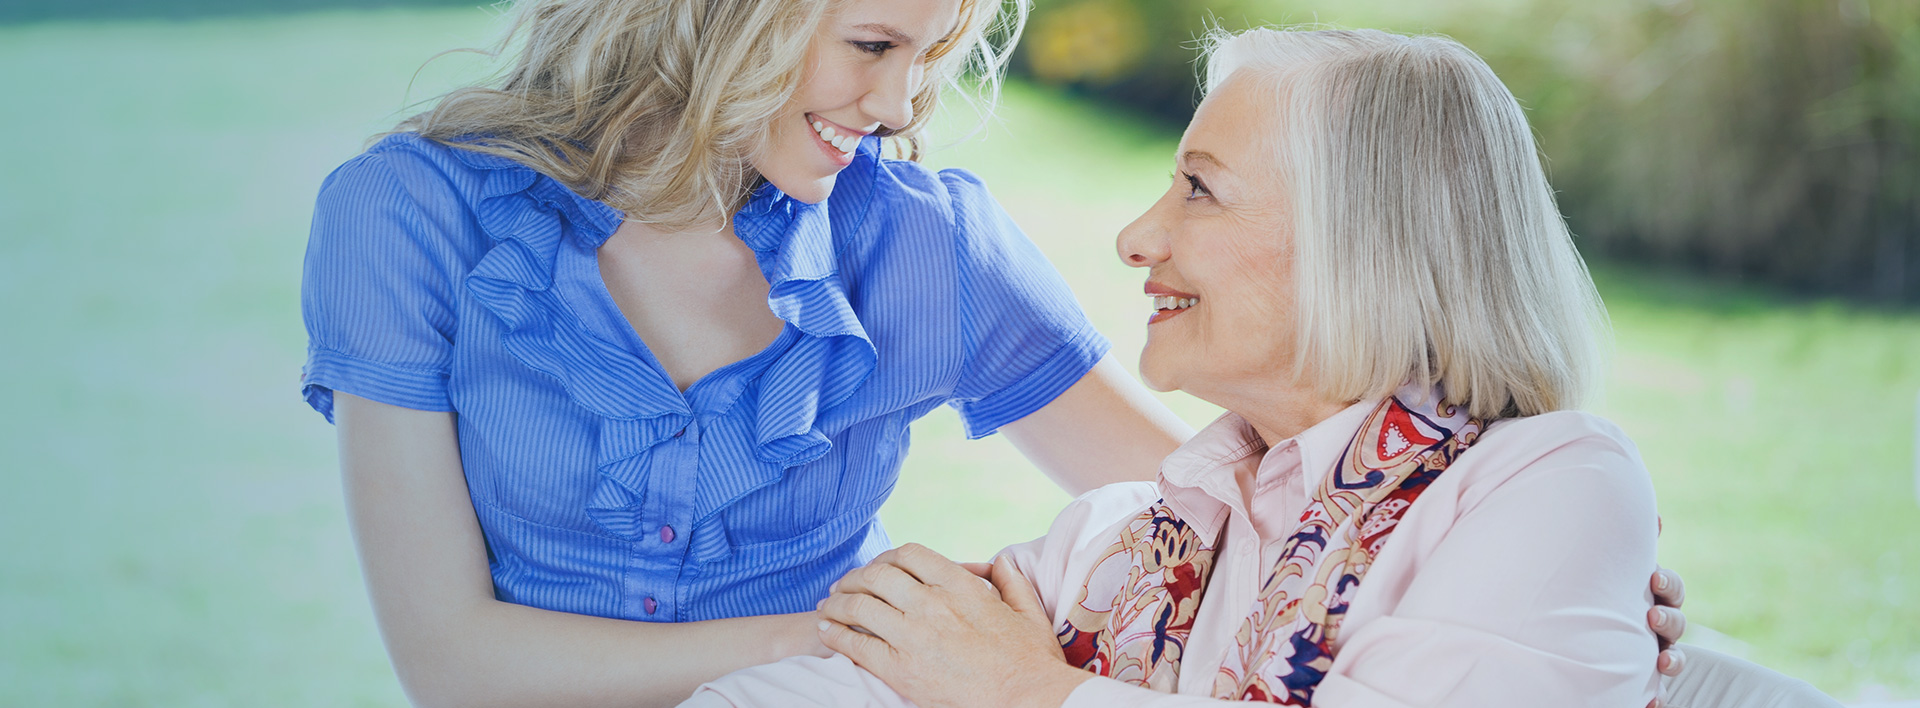 Home Care Nursing For Seniors - Elderly Caregivers Vancouver